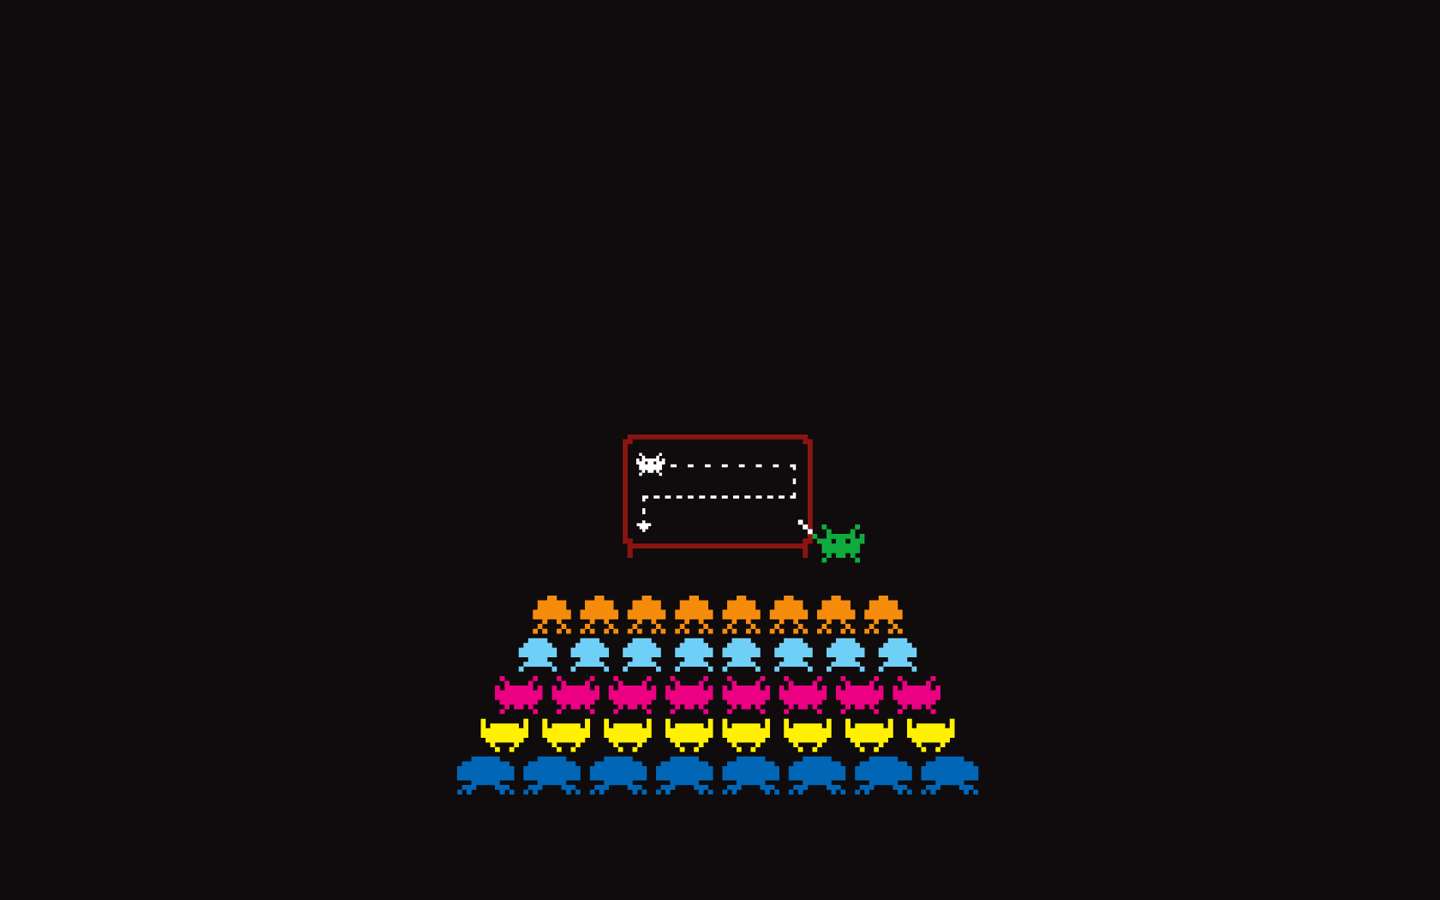 General 1440x900 Space Invaders simple background minimalism video games retro games black background pixel art humor video game art